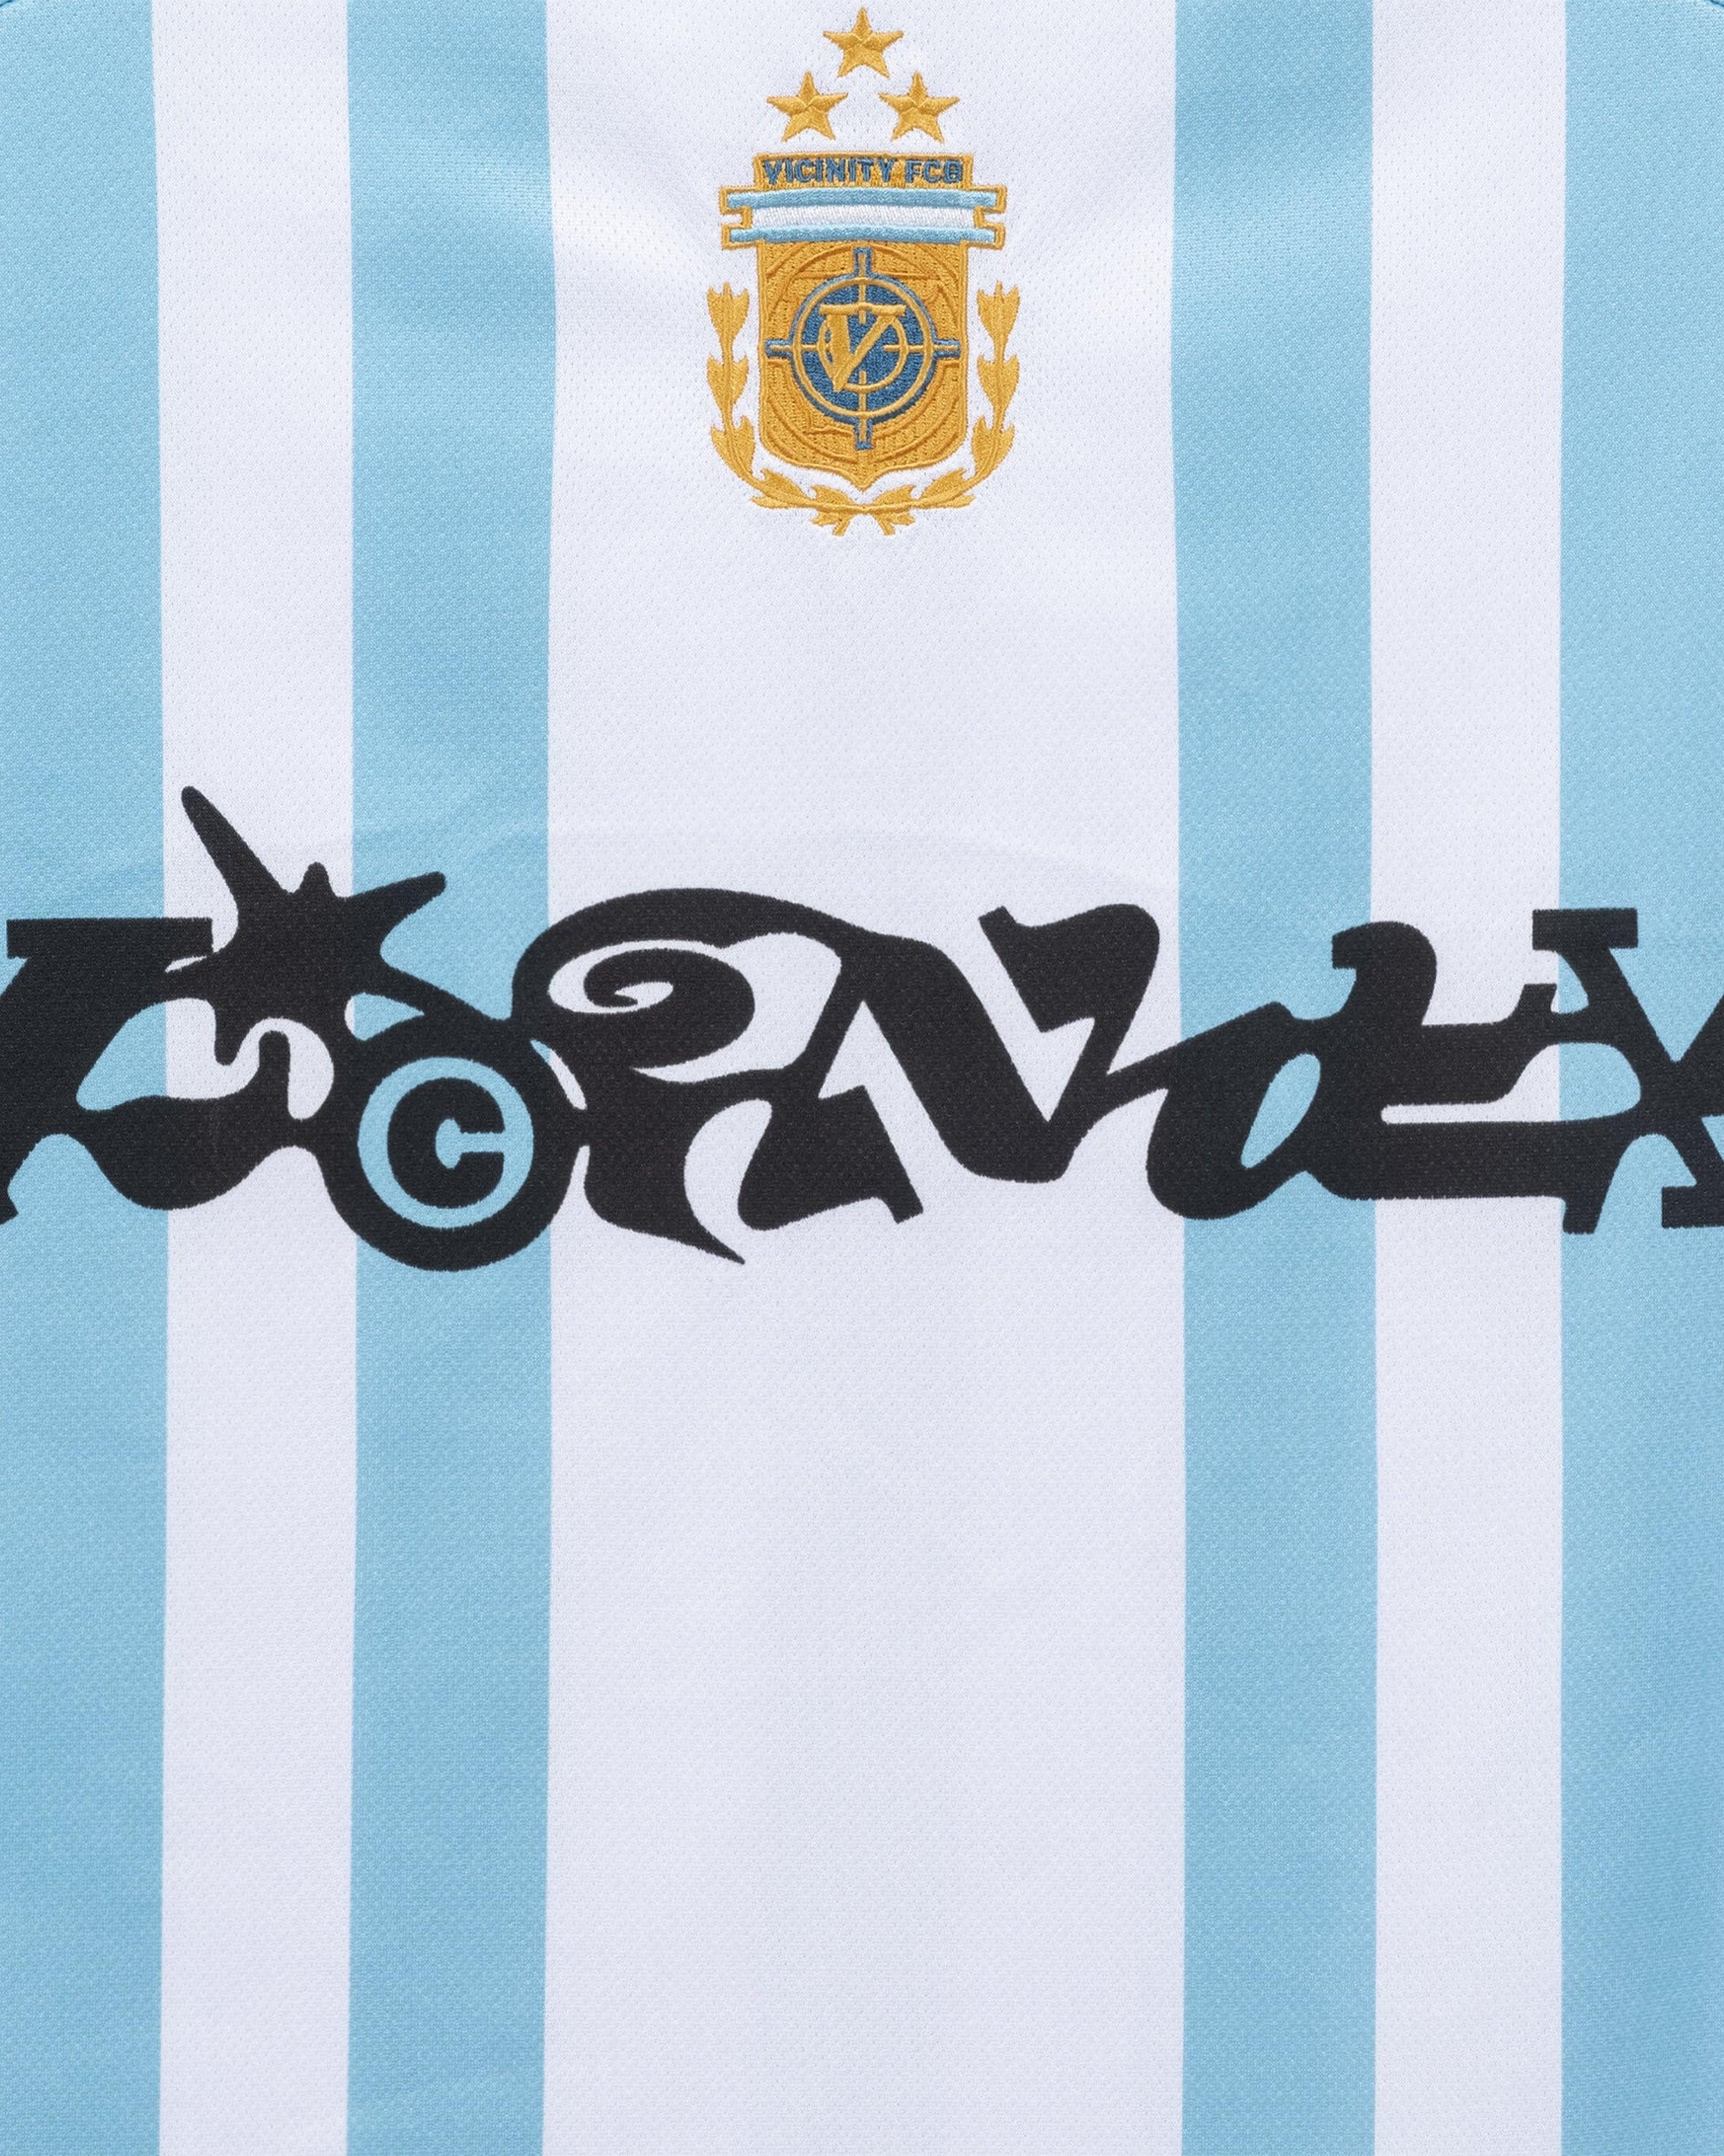 ARGENTINA JERSEY - VICINITY